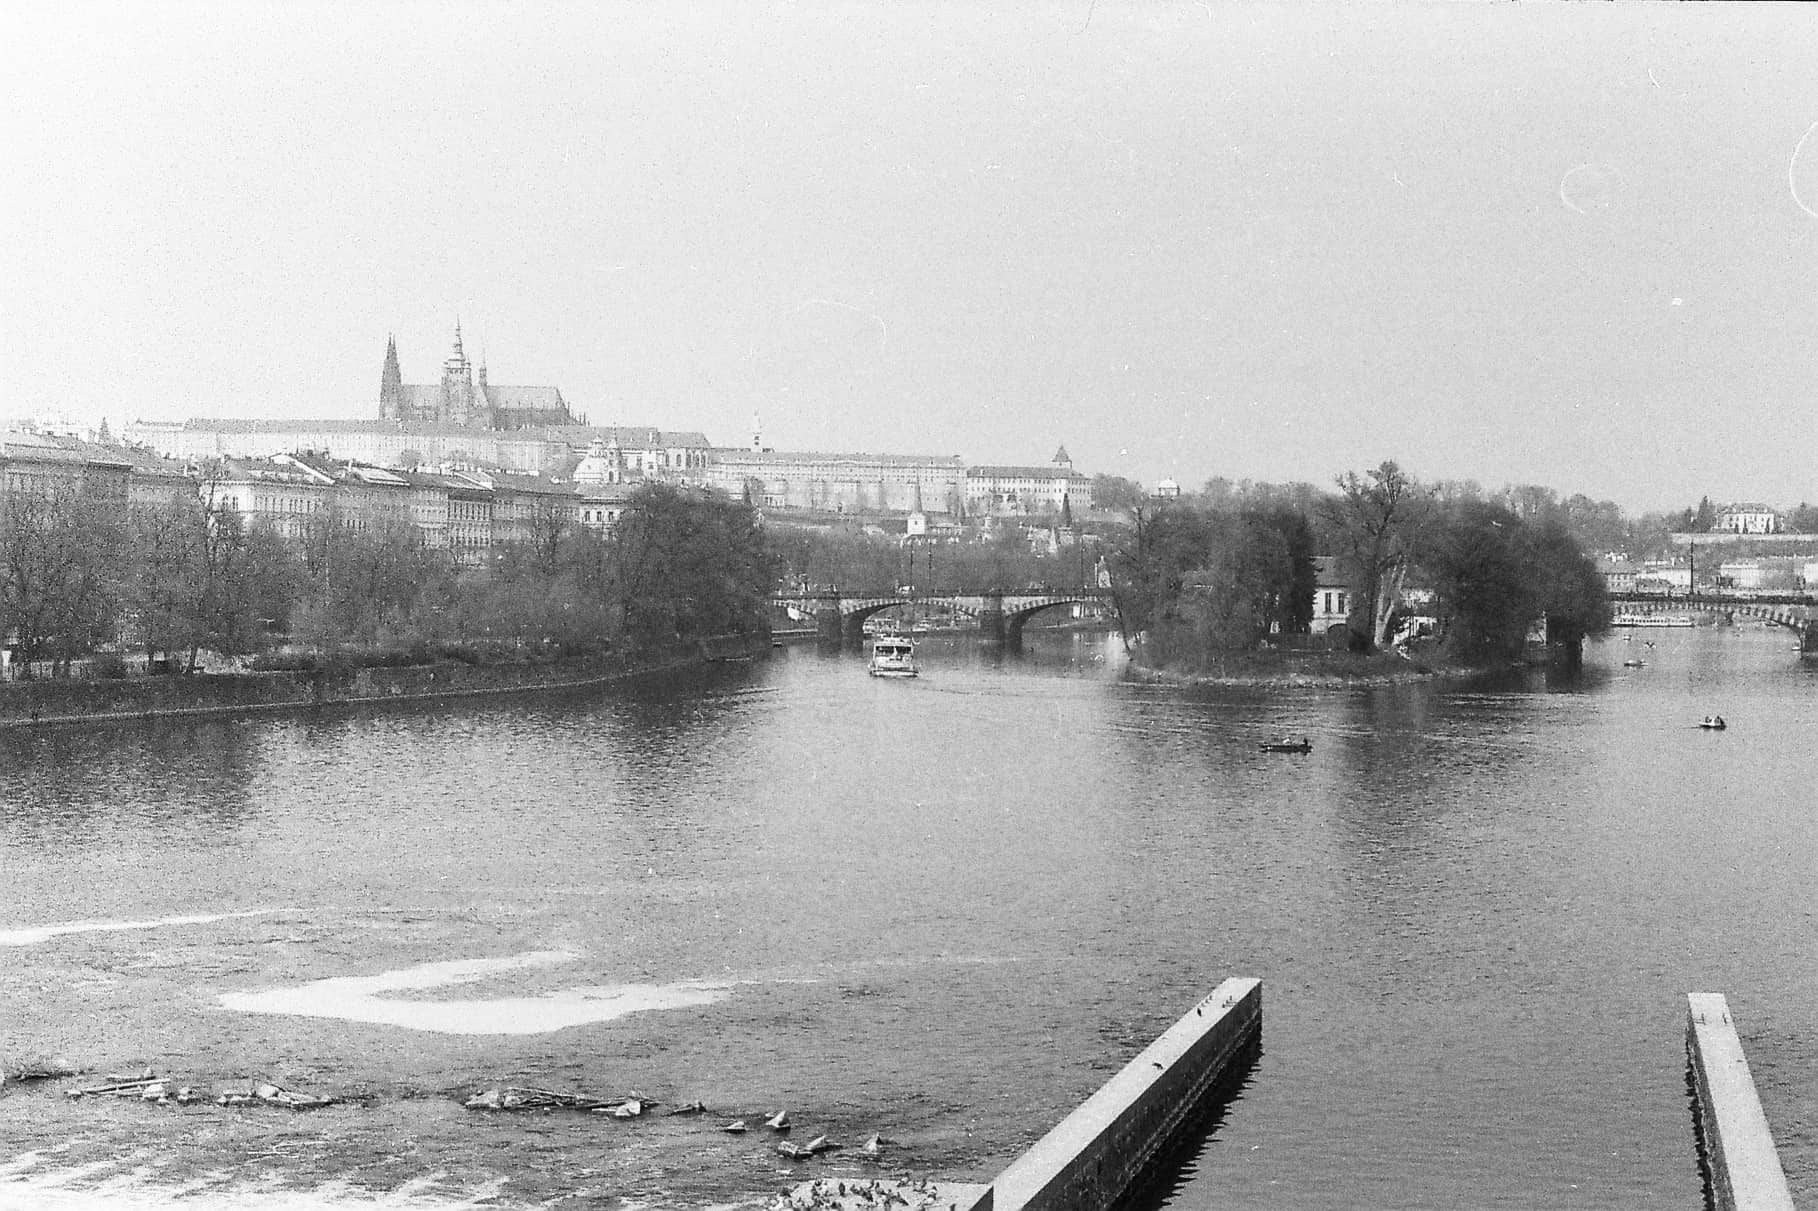 Praha and Vltava (Photo Challenge)